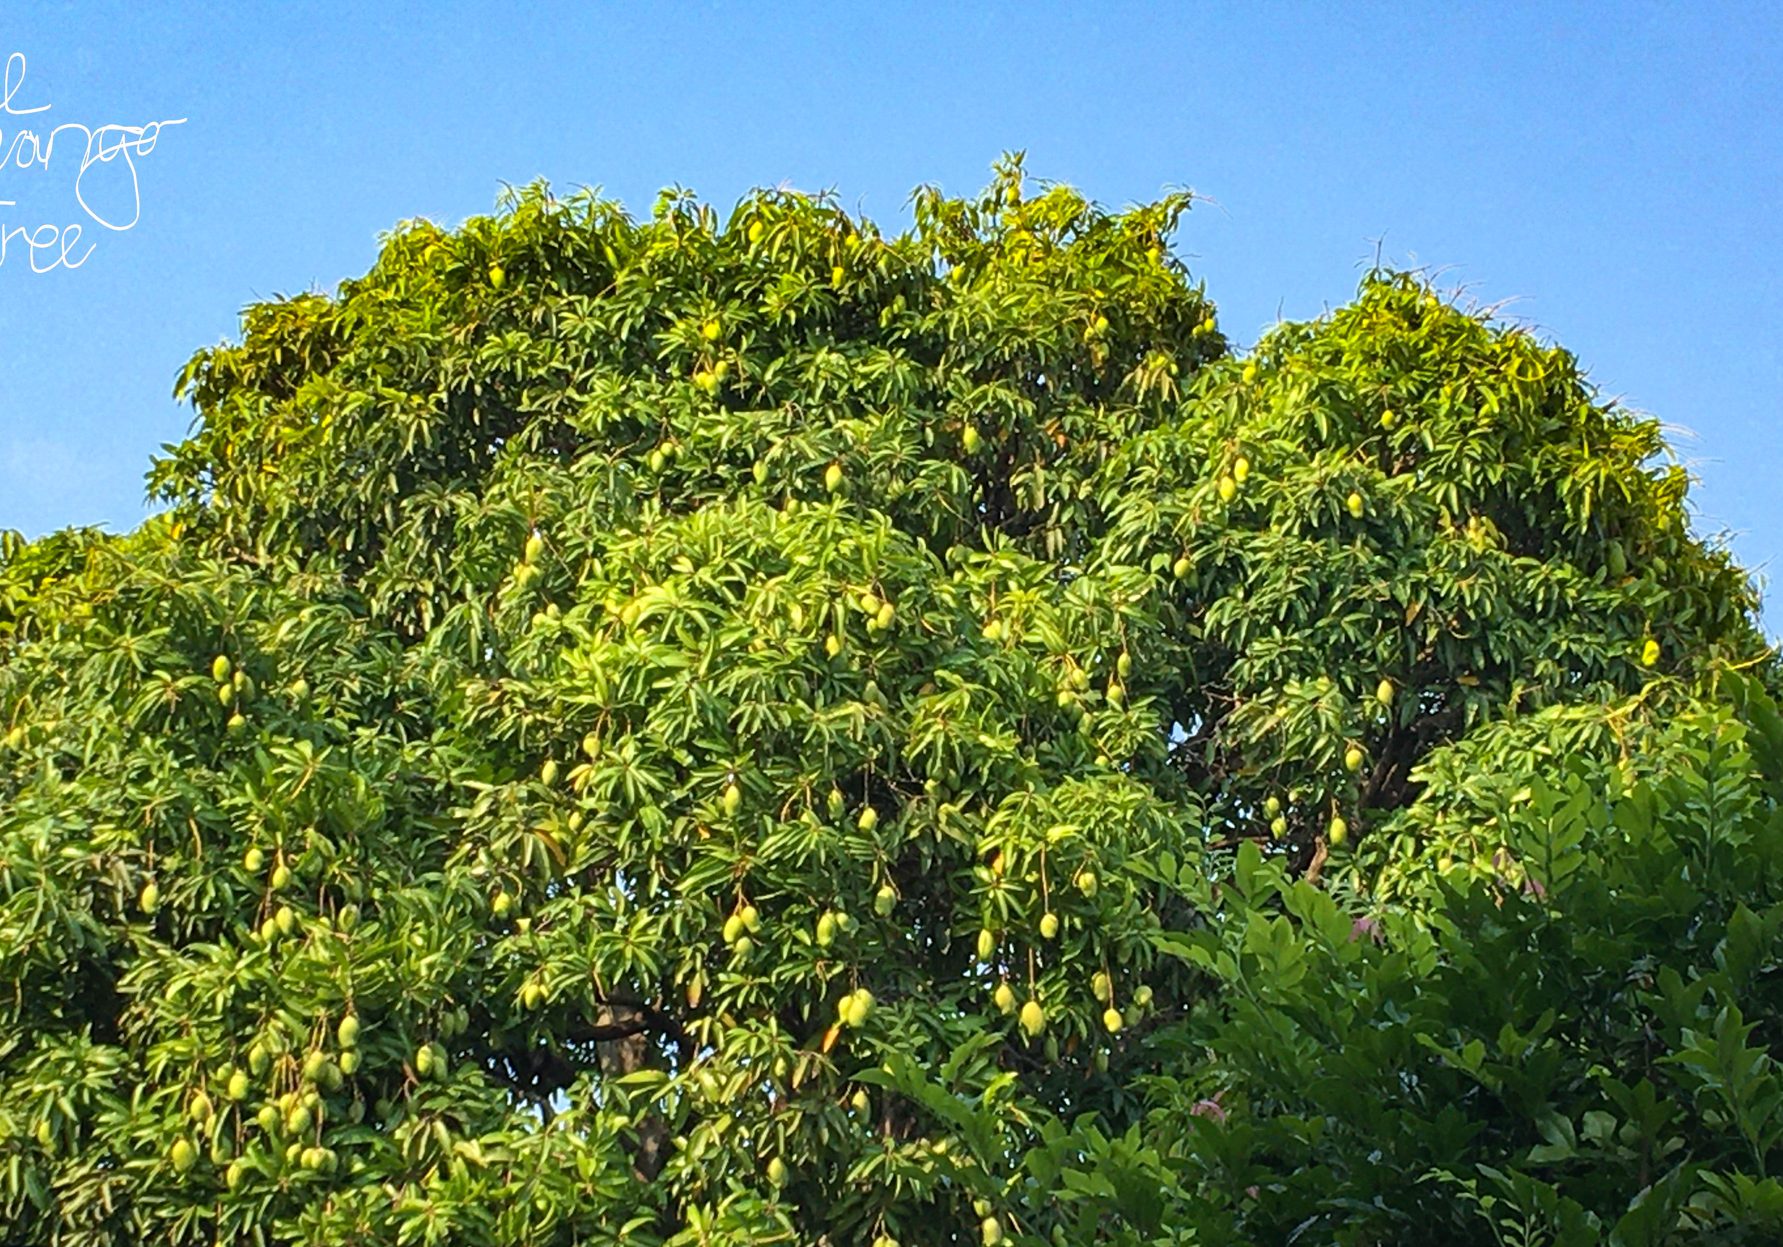 1-the mango tree